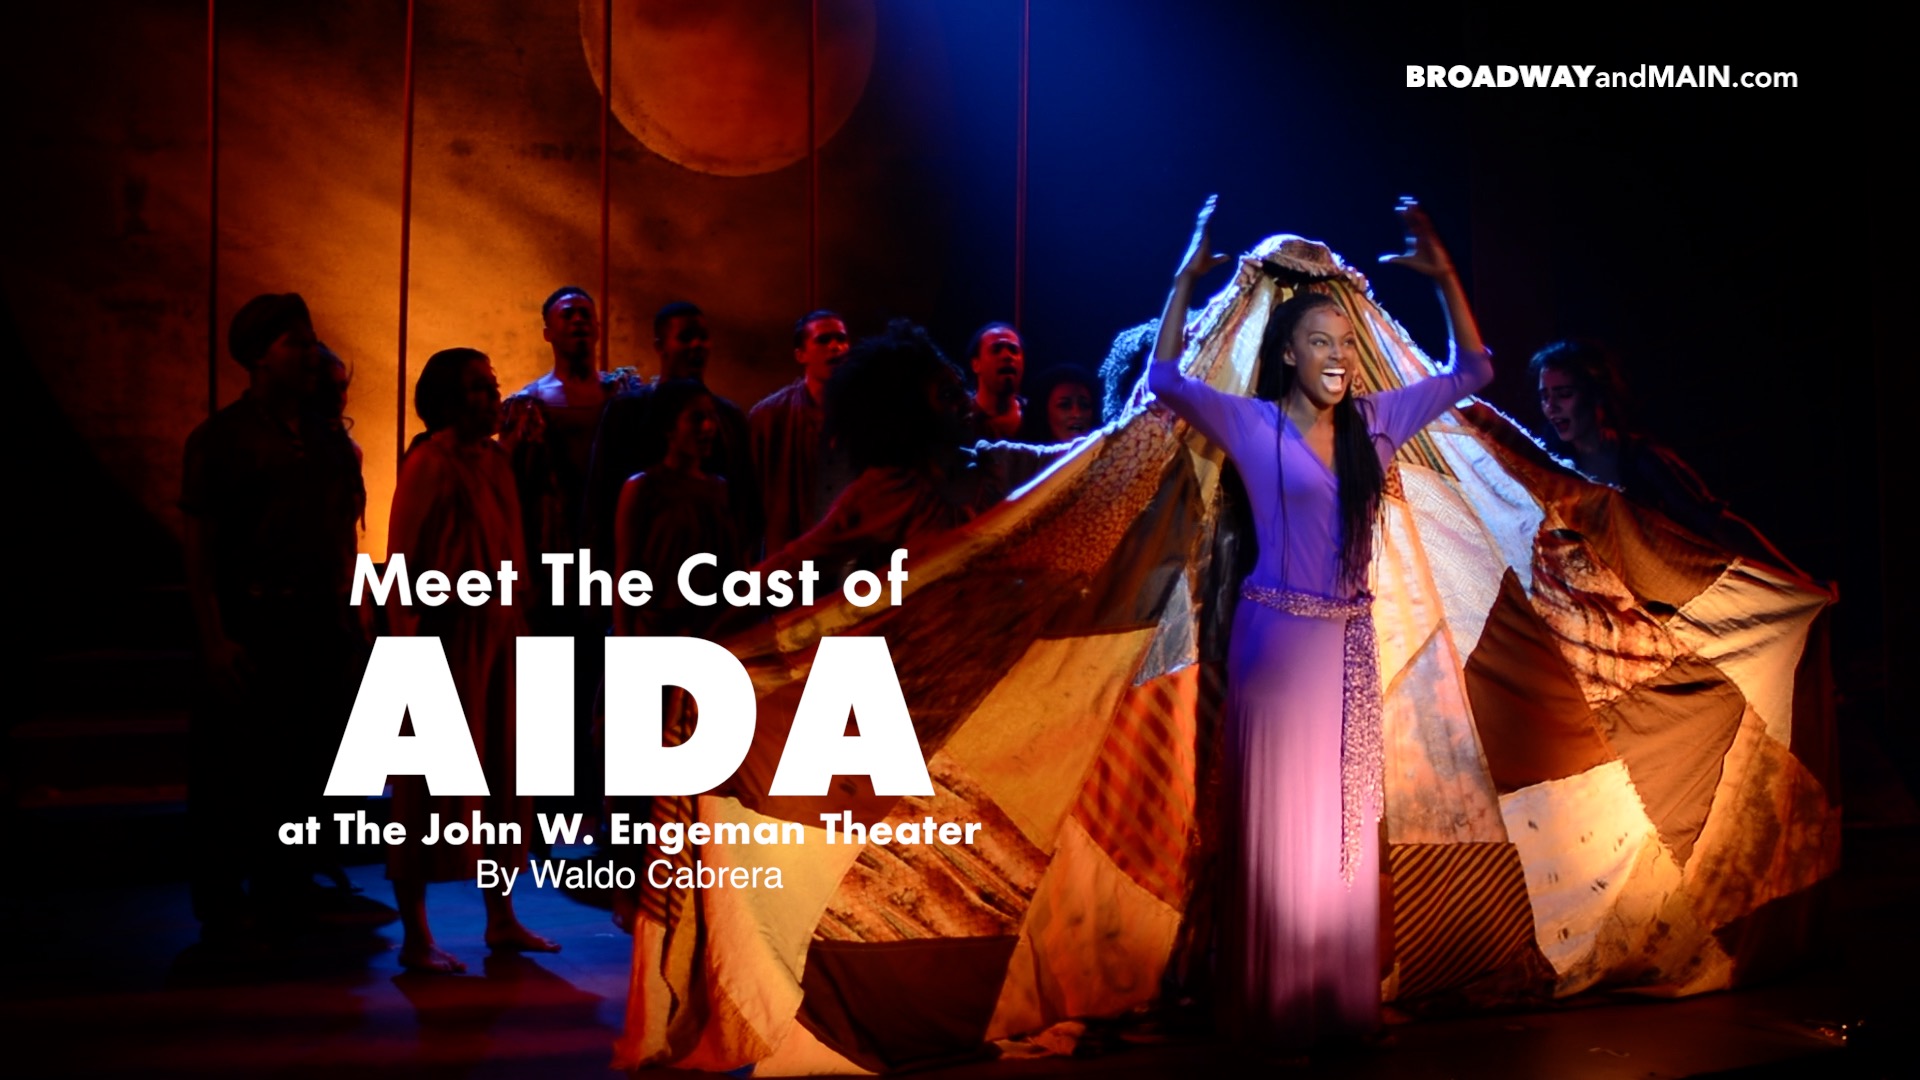 Meet the Cast of AIDA at the John W Engeman Theater